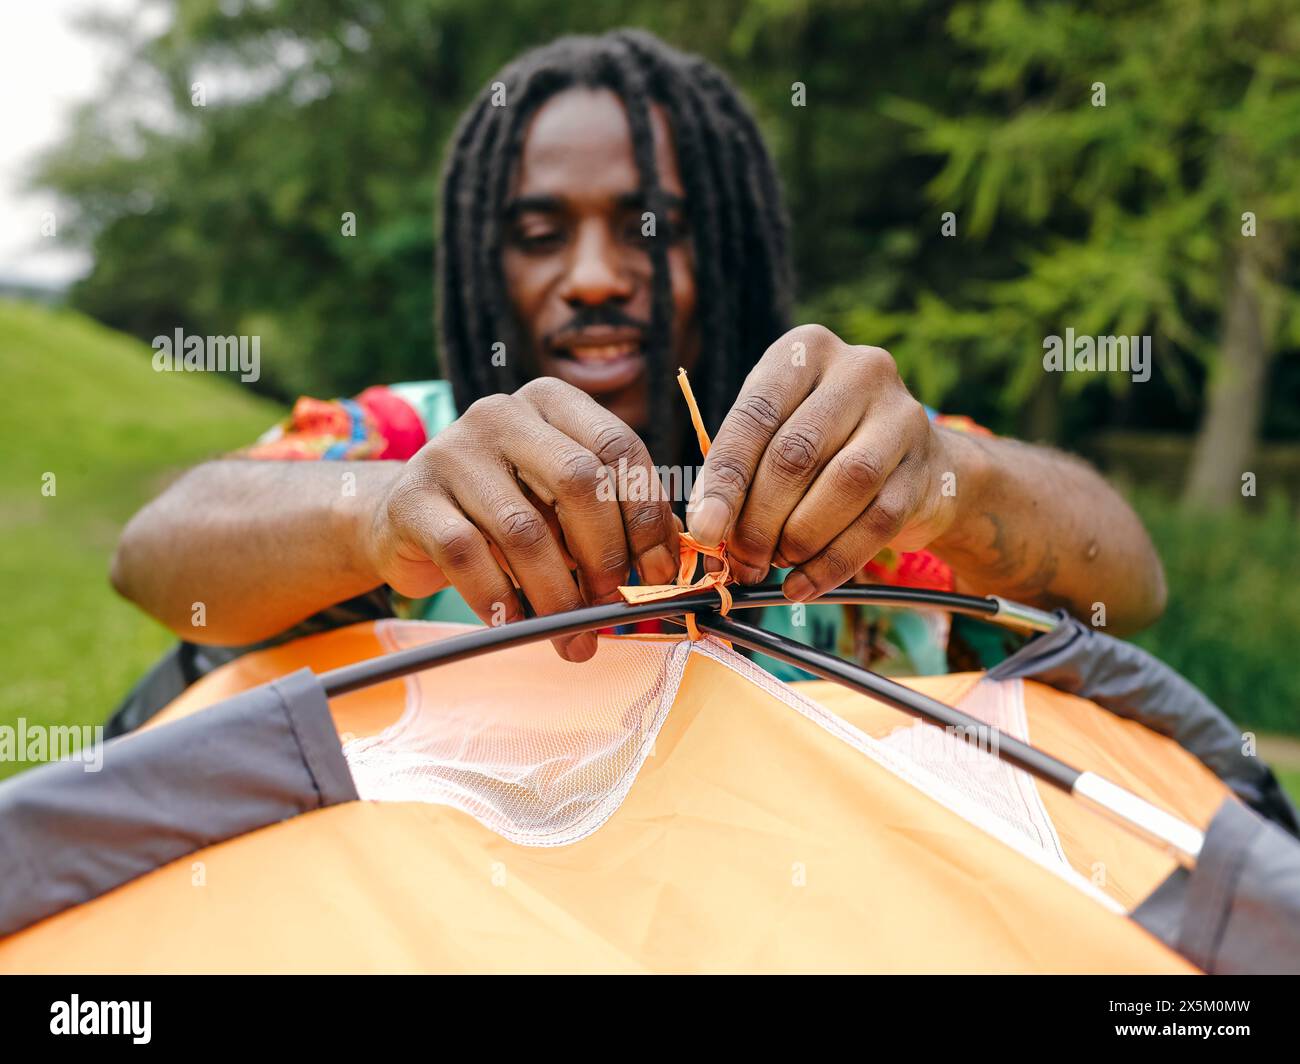 Man setting up tent Stock Photo